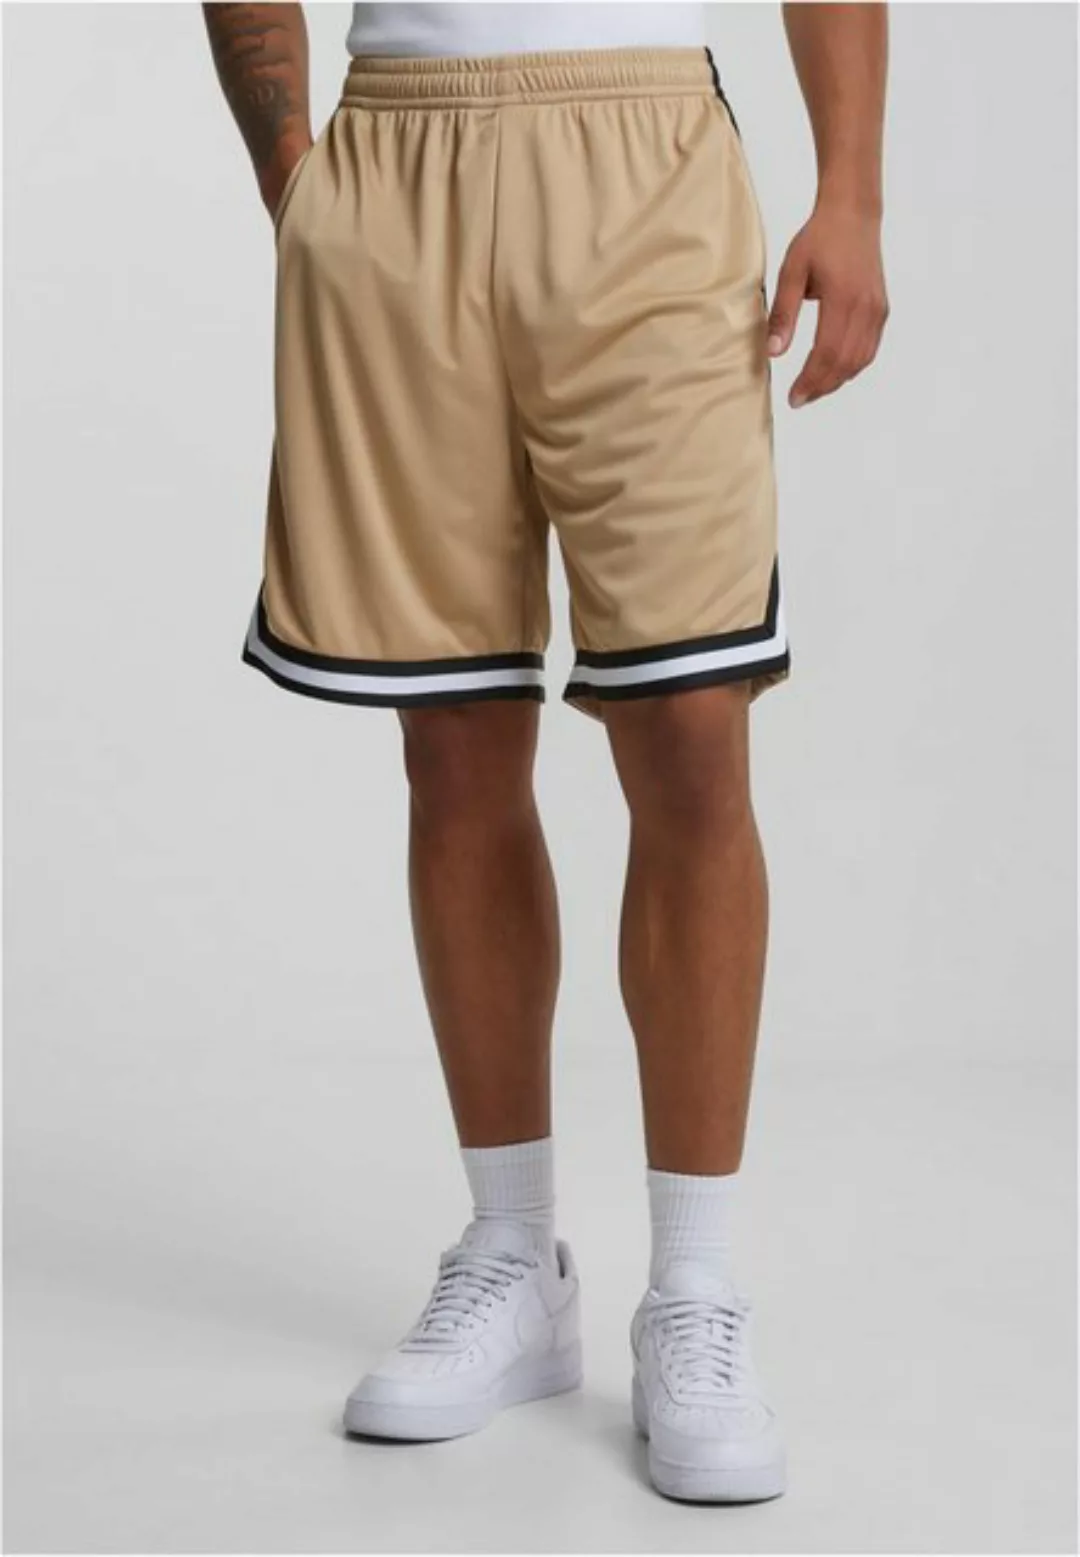 URBAN CLASSICS Shorts TB243 - Stripes Mesh Shorts unionbeige/black/white L günstig online kaufen